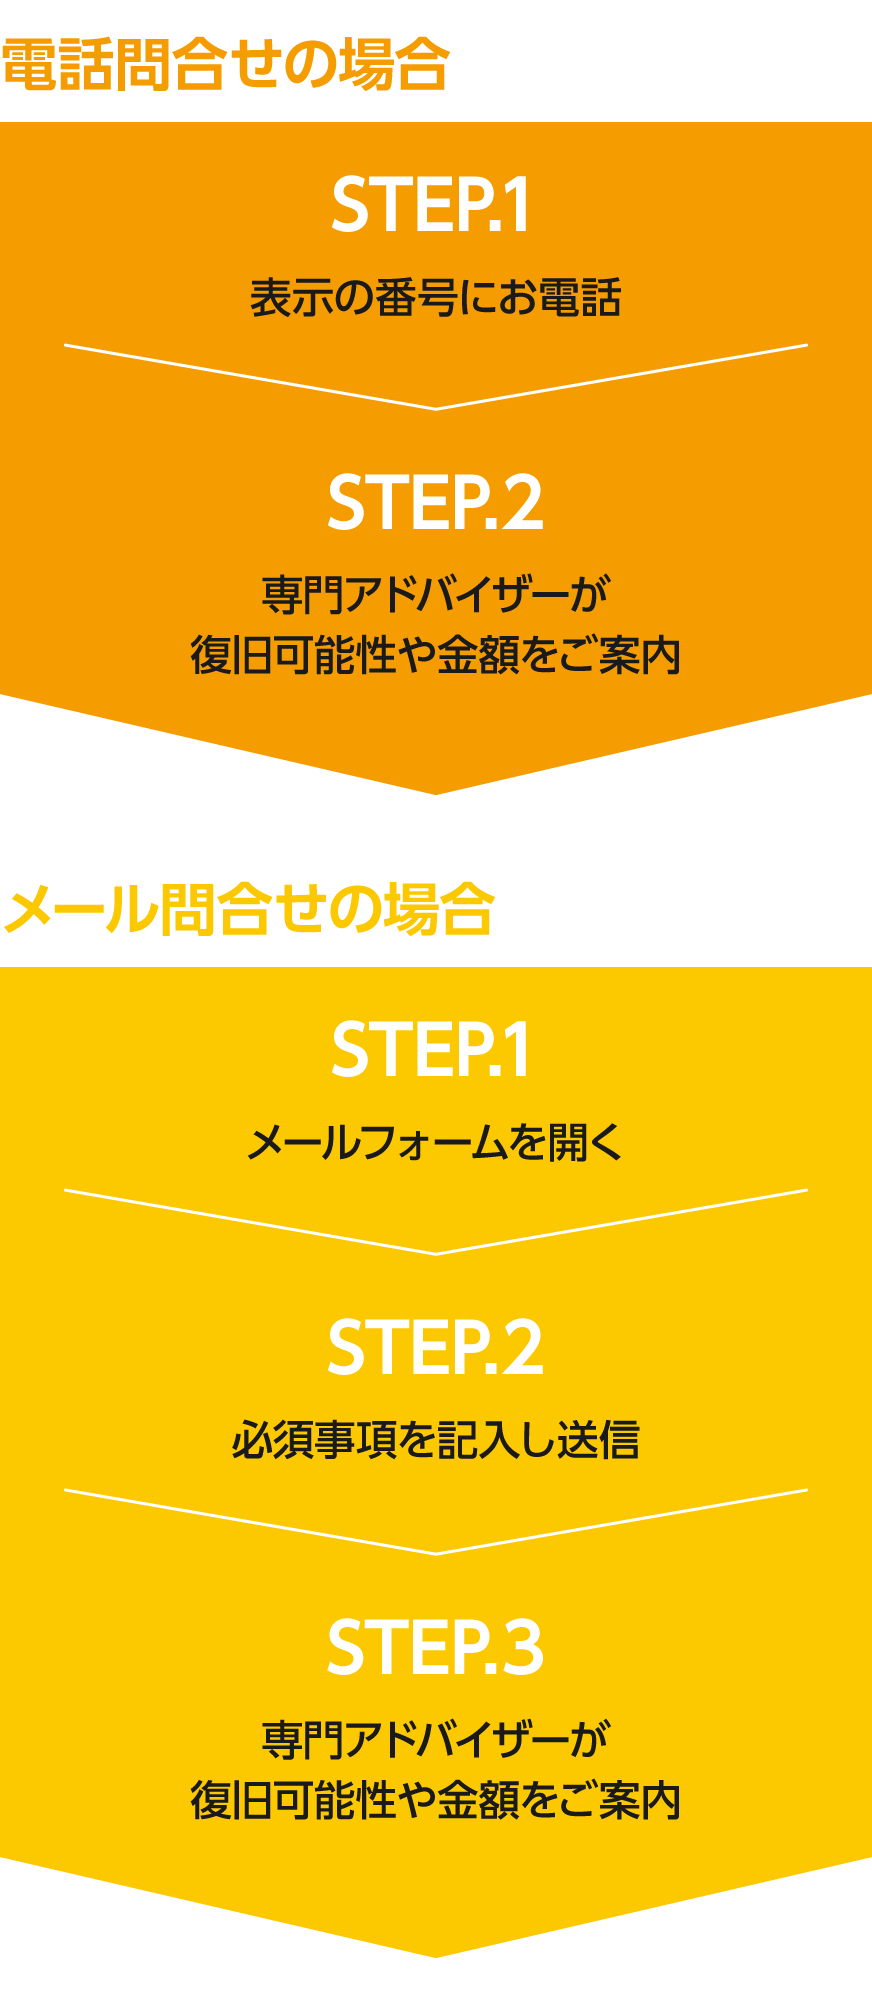 STEP1,2,3